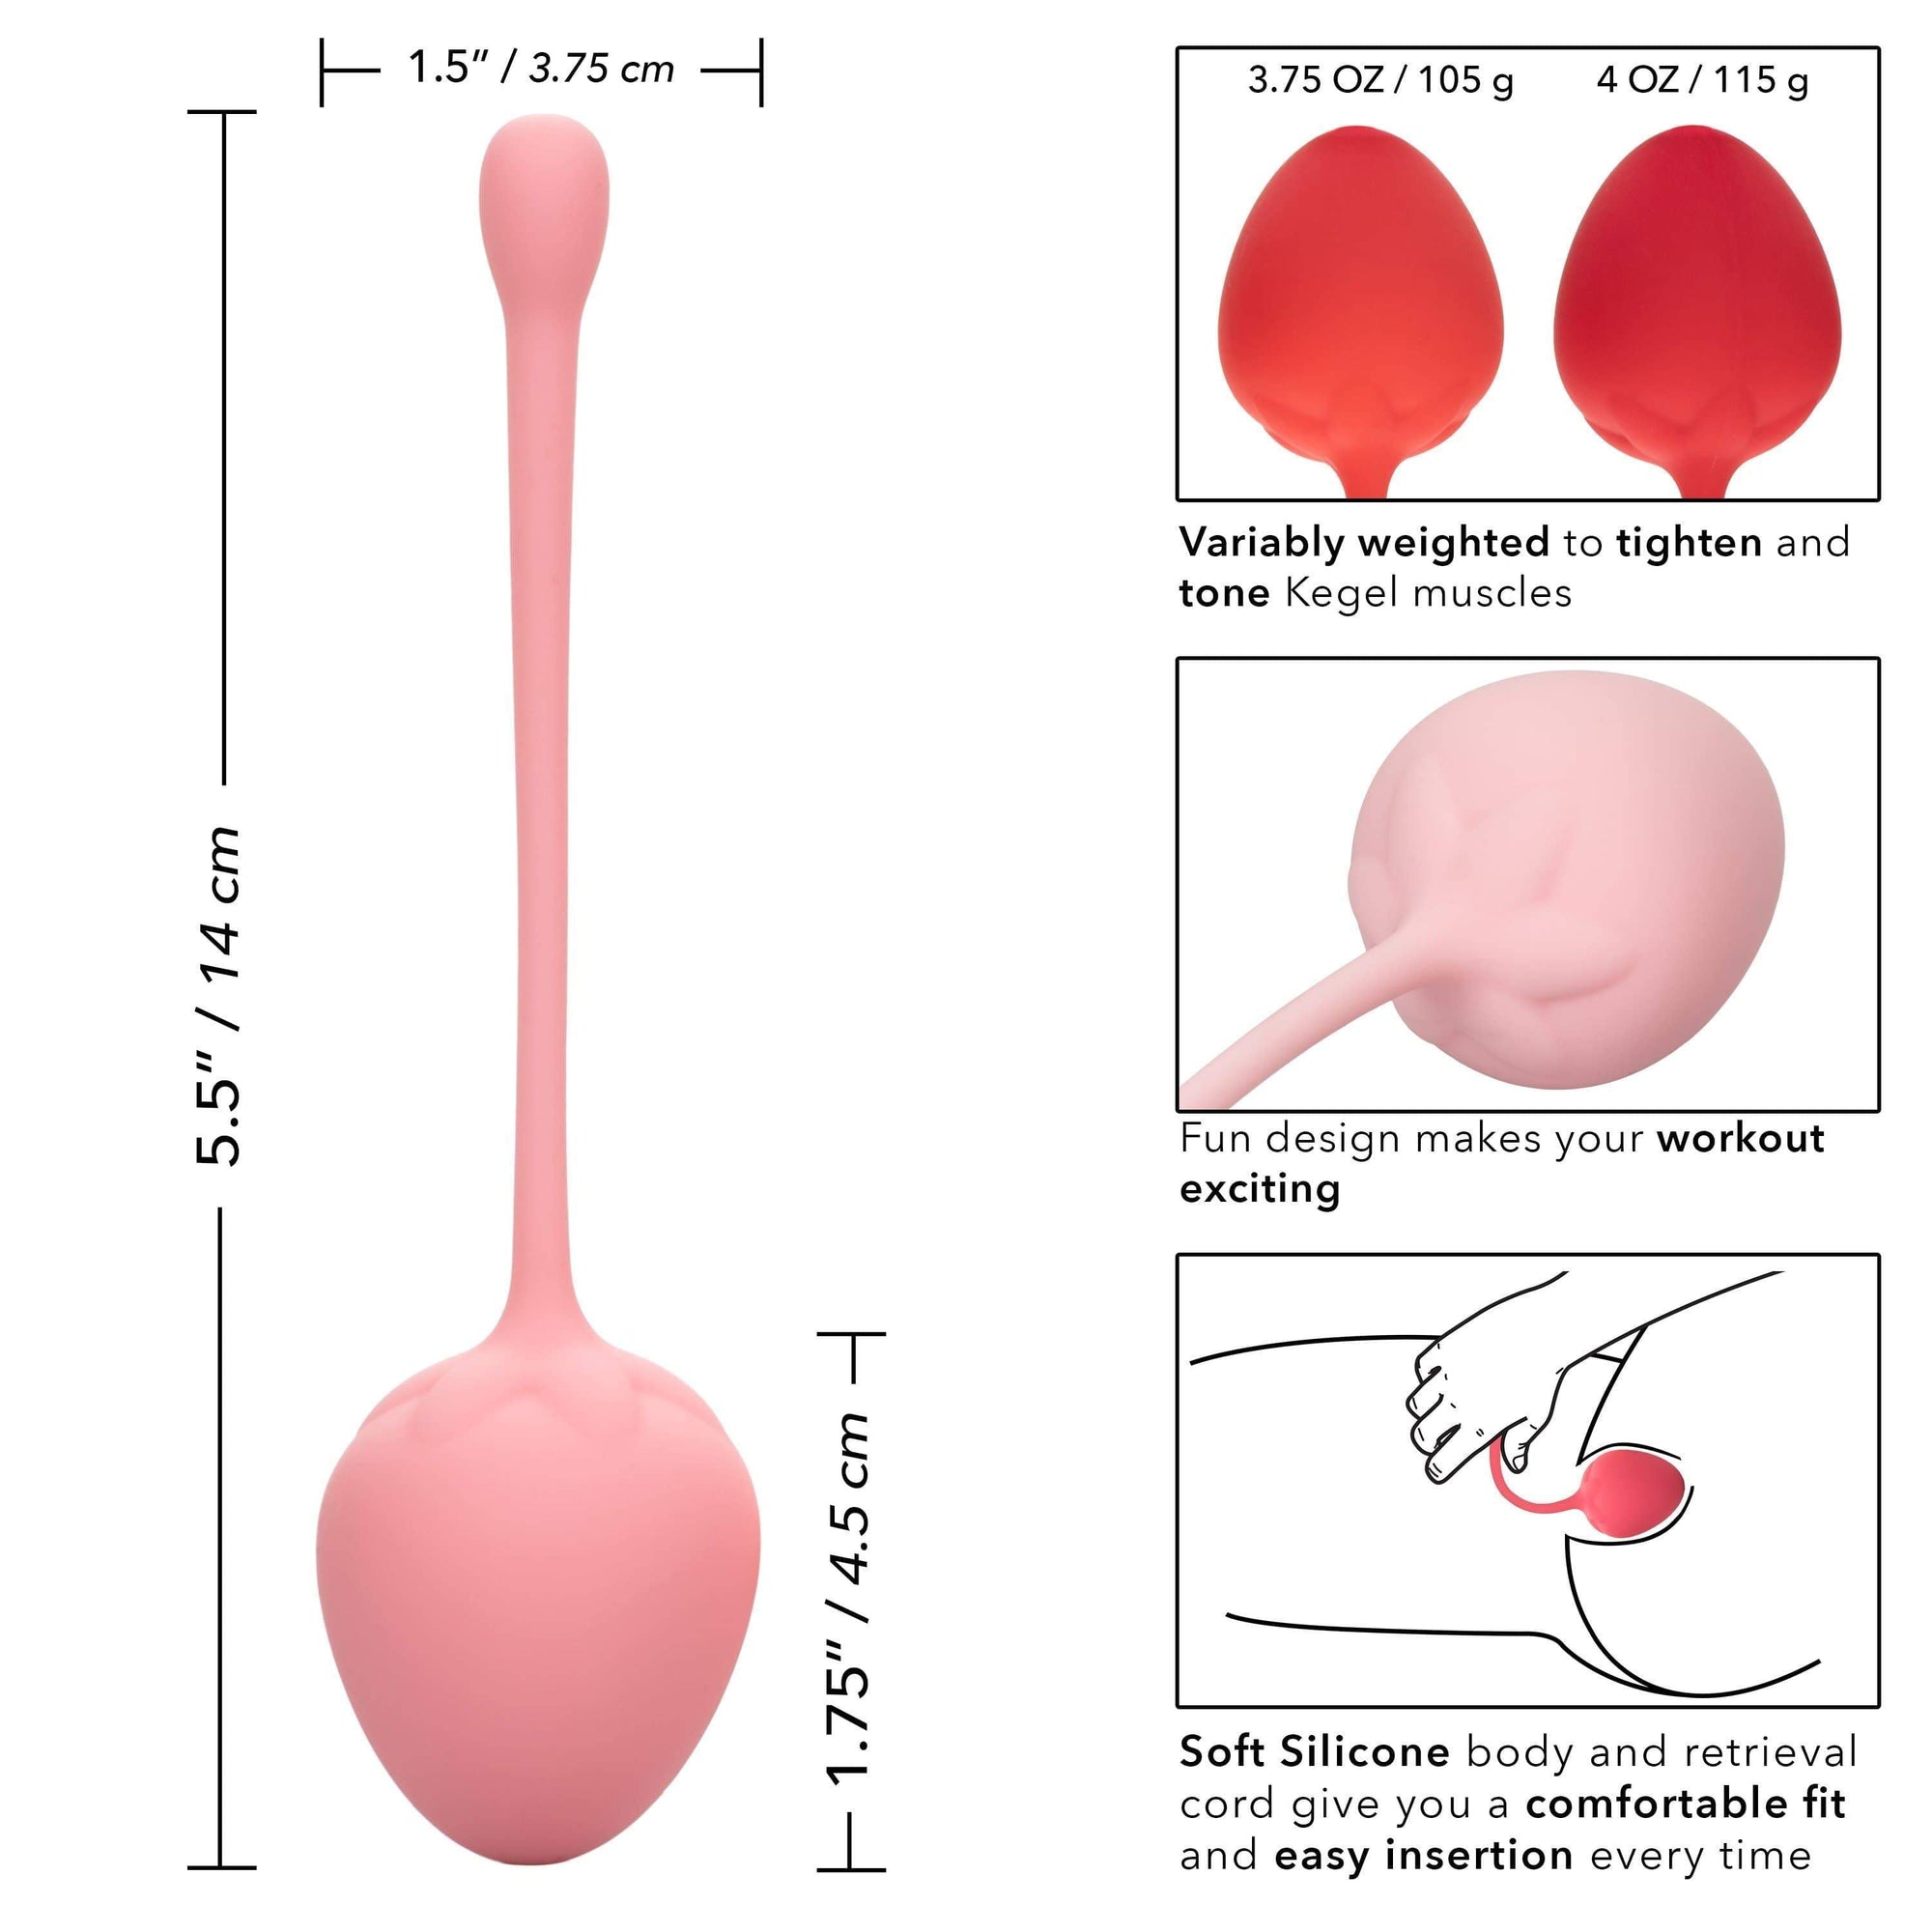 California Exotics - Strawberry Silicone Kegel Balls Training Set (Pink) -  Kegel Balls (Non Vibration)  Durio.sg